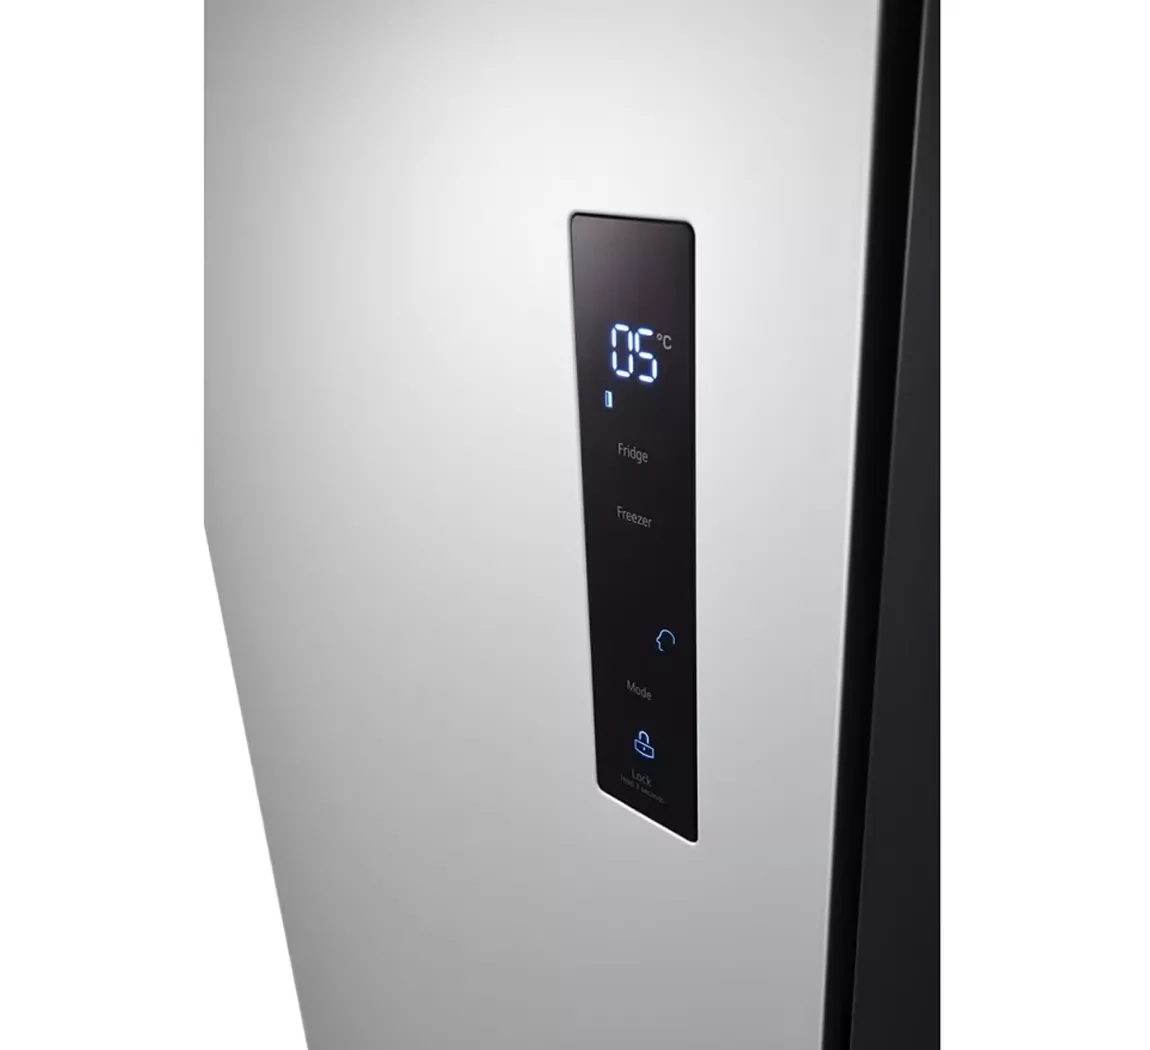 LG Refrigeradora │ 508 Lt │ Pantalla LED │ Sistema No Frost │ Side by Side